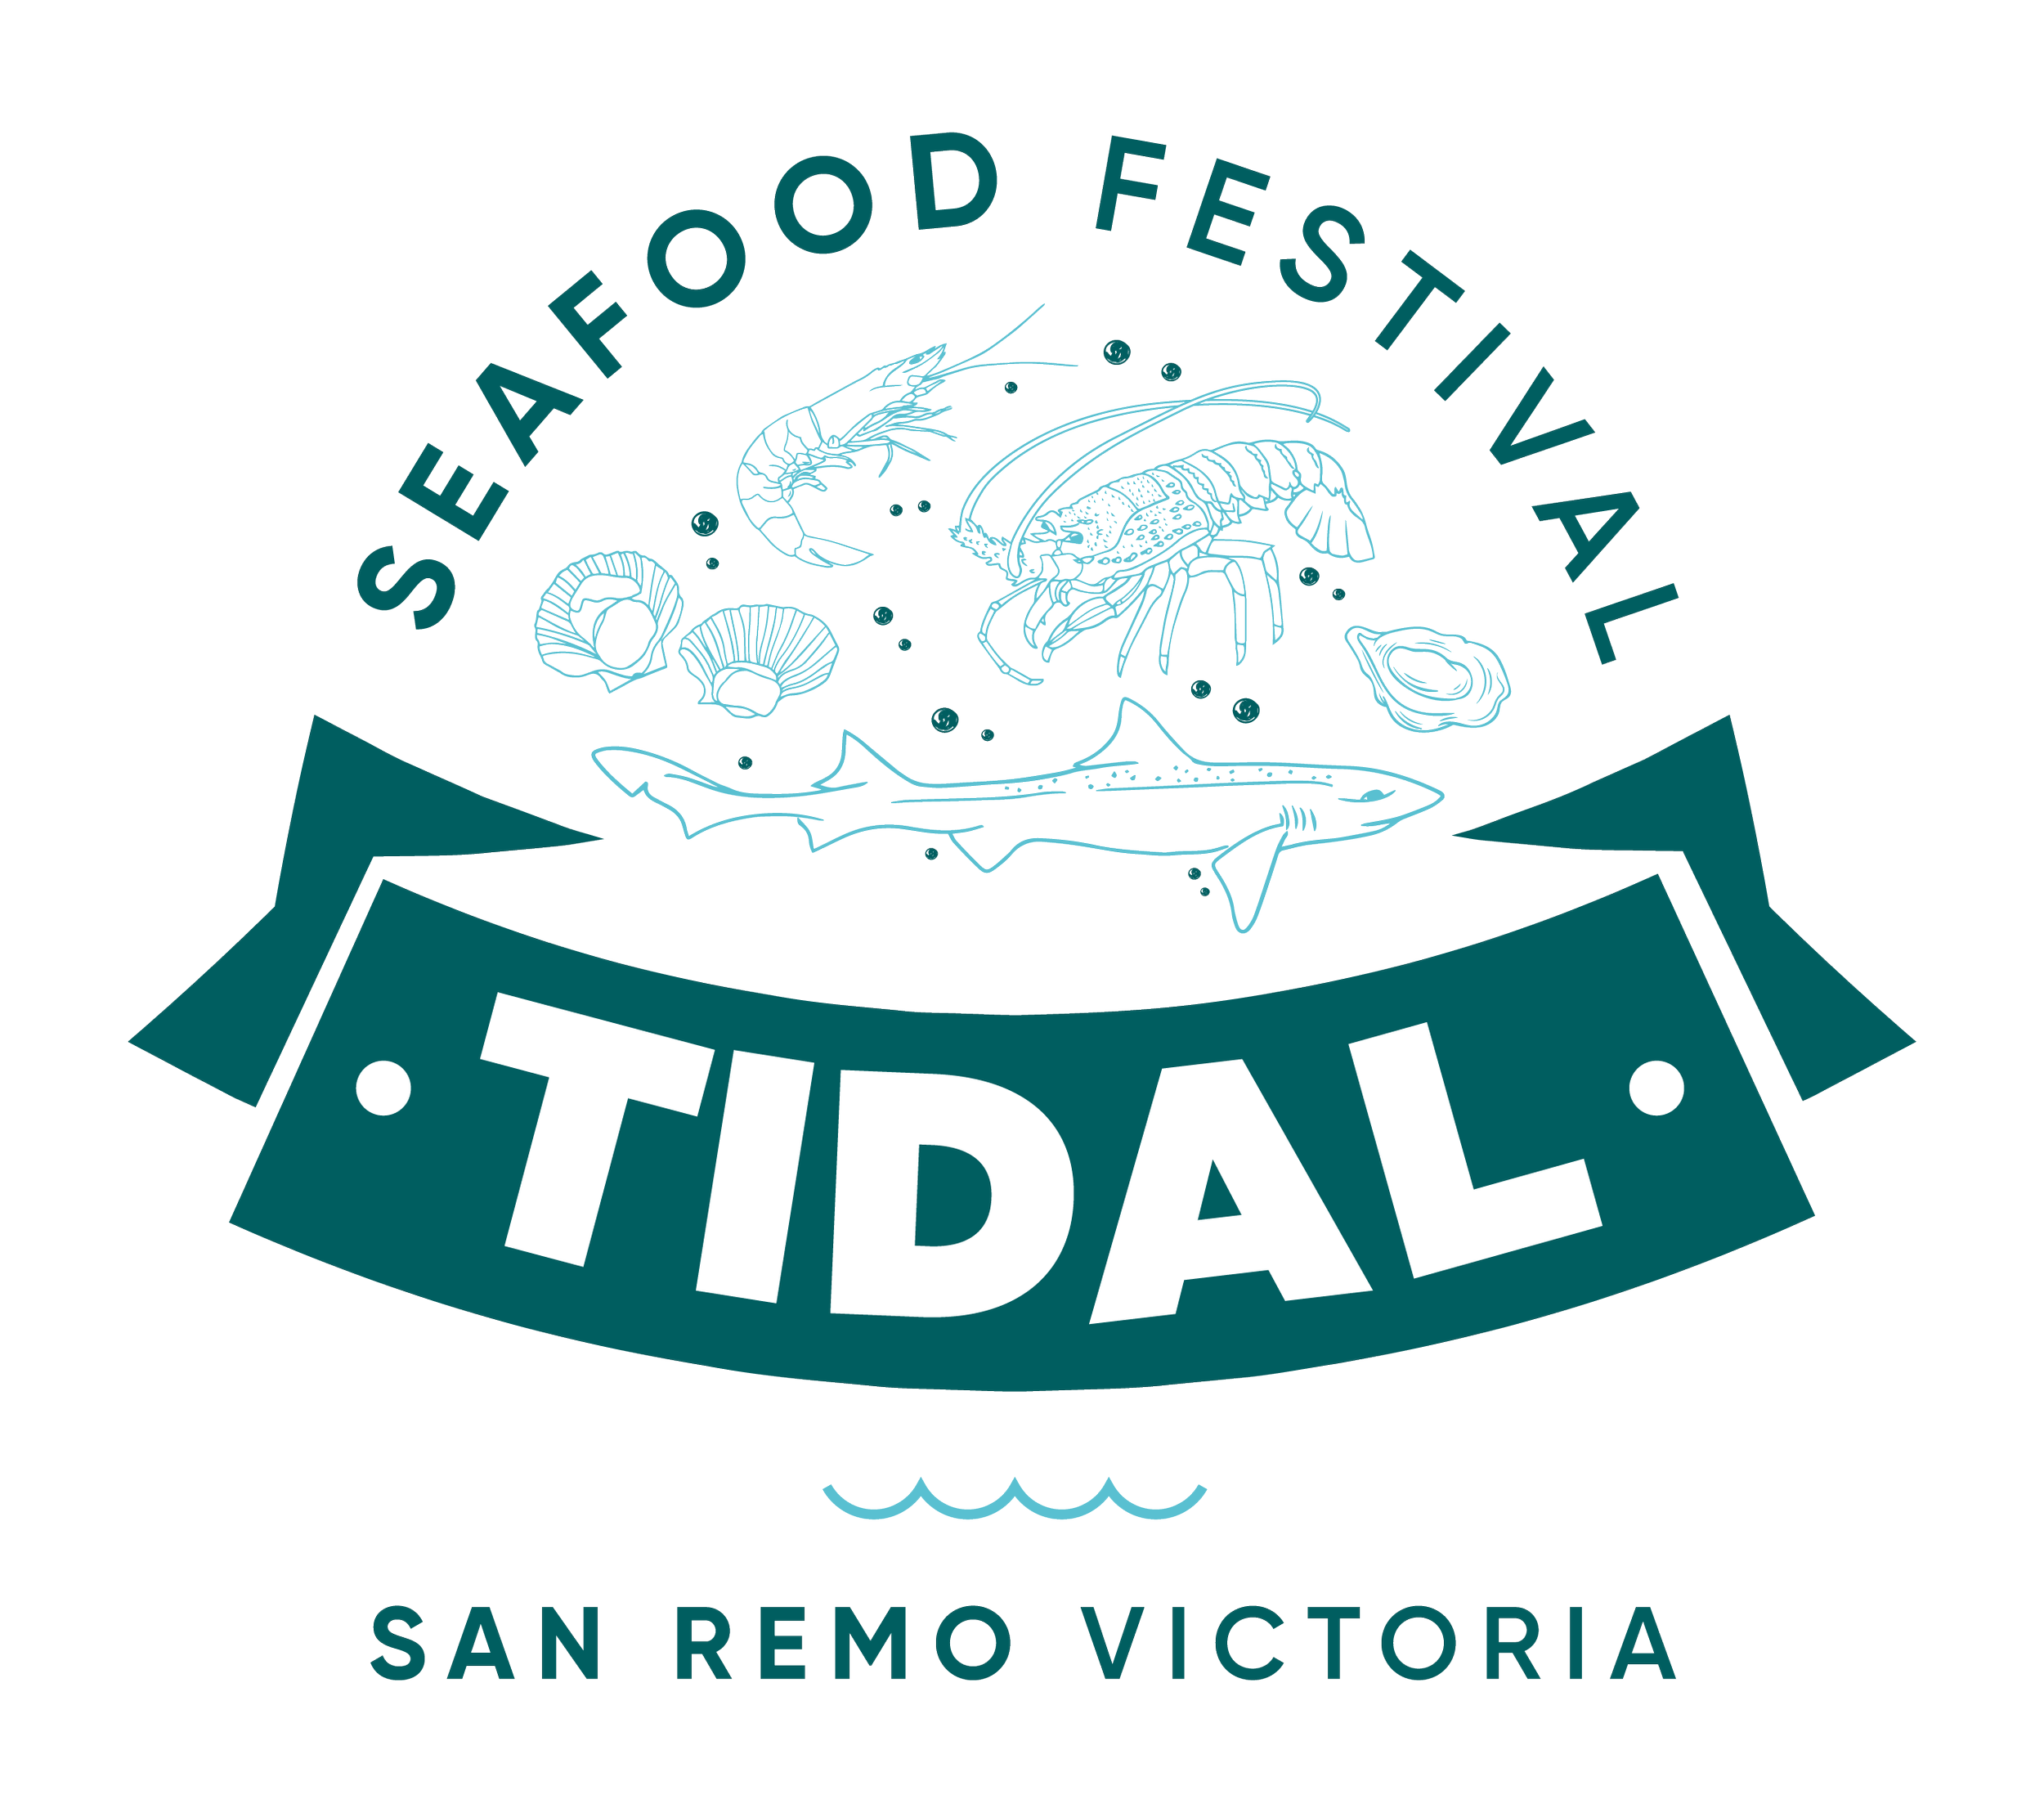 TIDAL Seafood Festival, San Remo